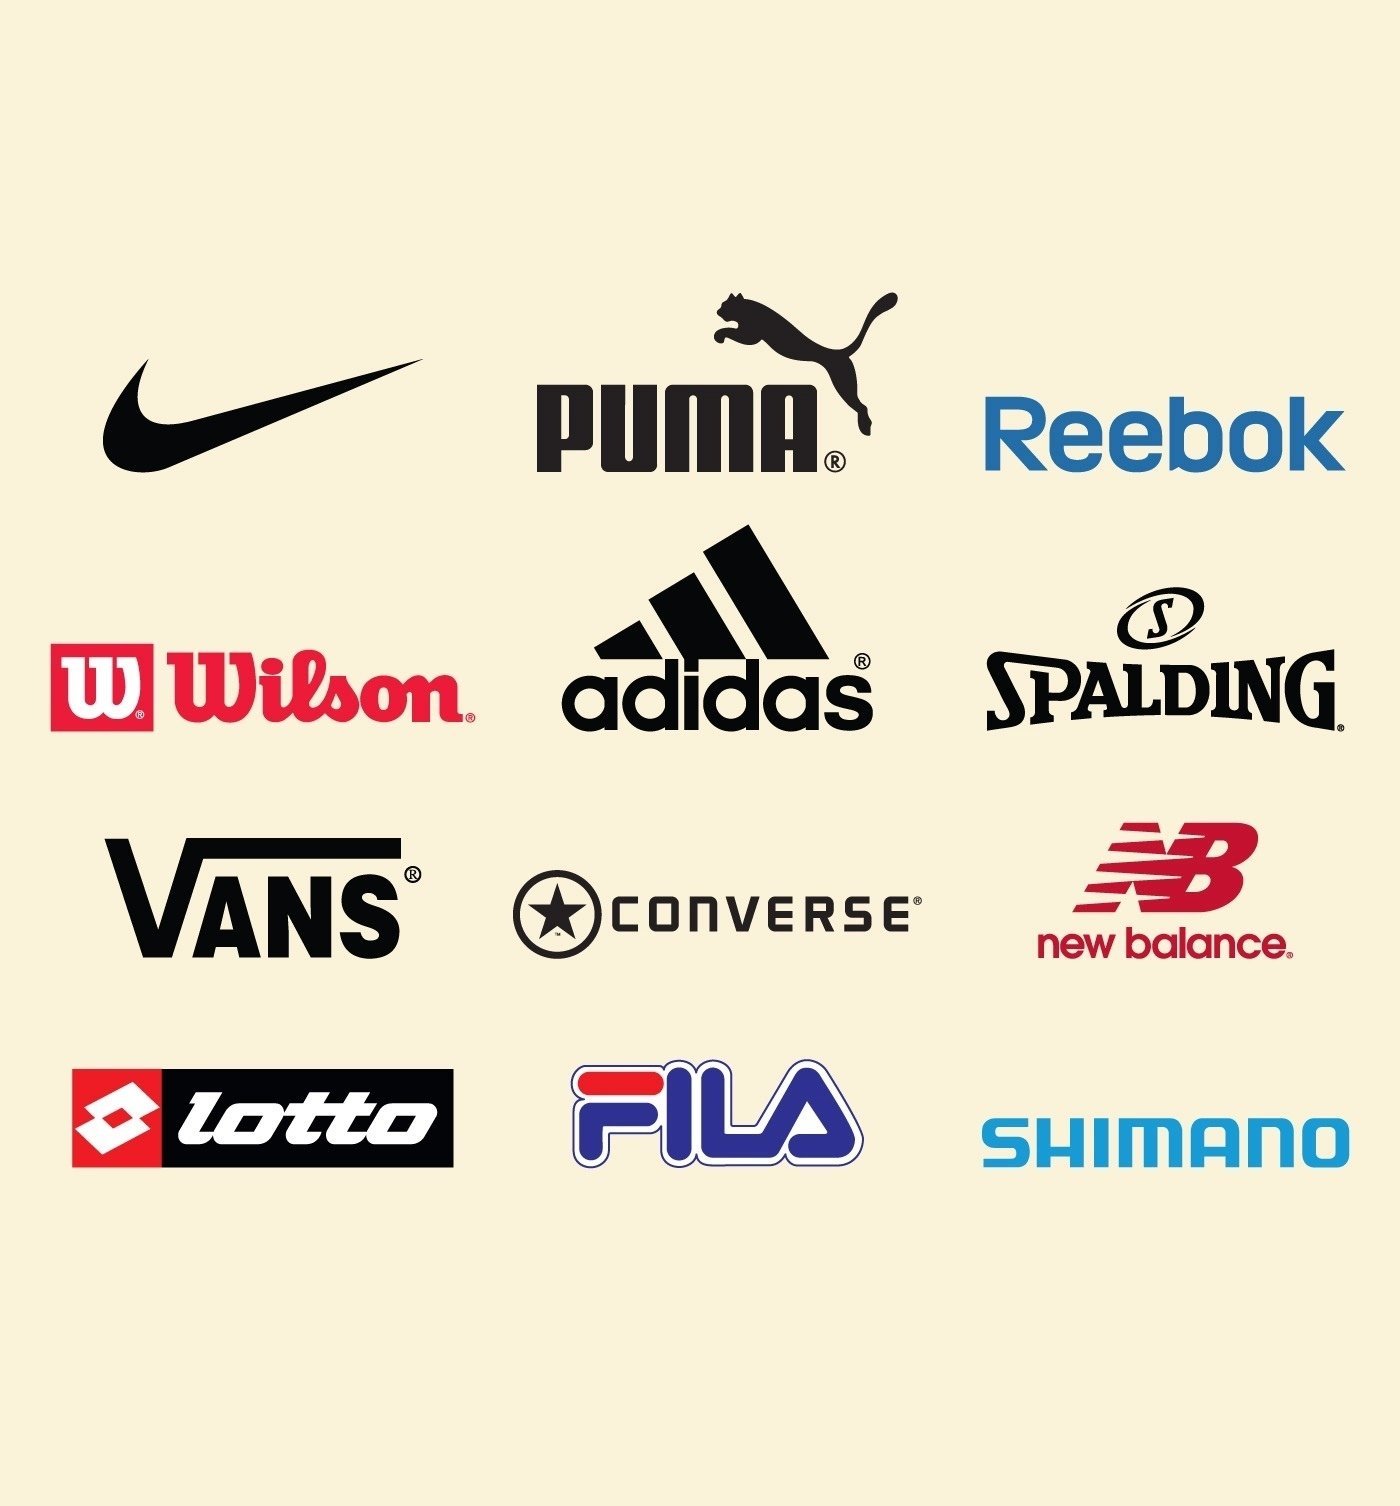 Фирма бренд обувь. Спортивные бренды. Спортивные марки одежды. Бренды спортивной одежды. Известные бренды спортивной одежды.